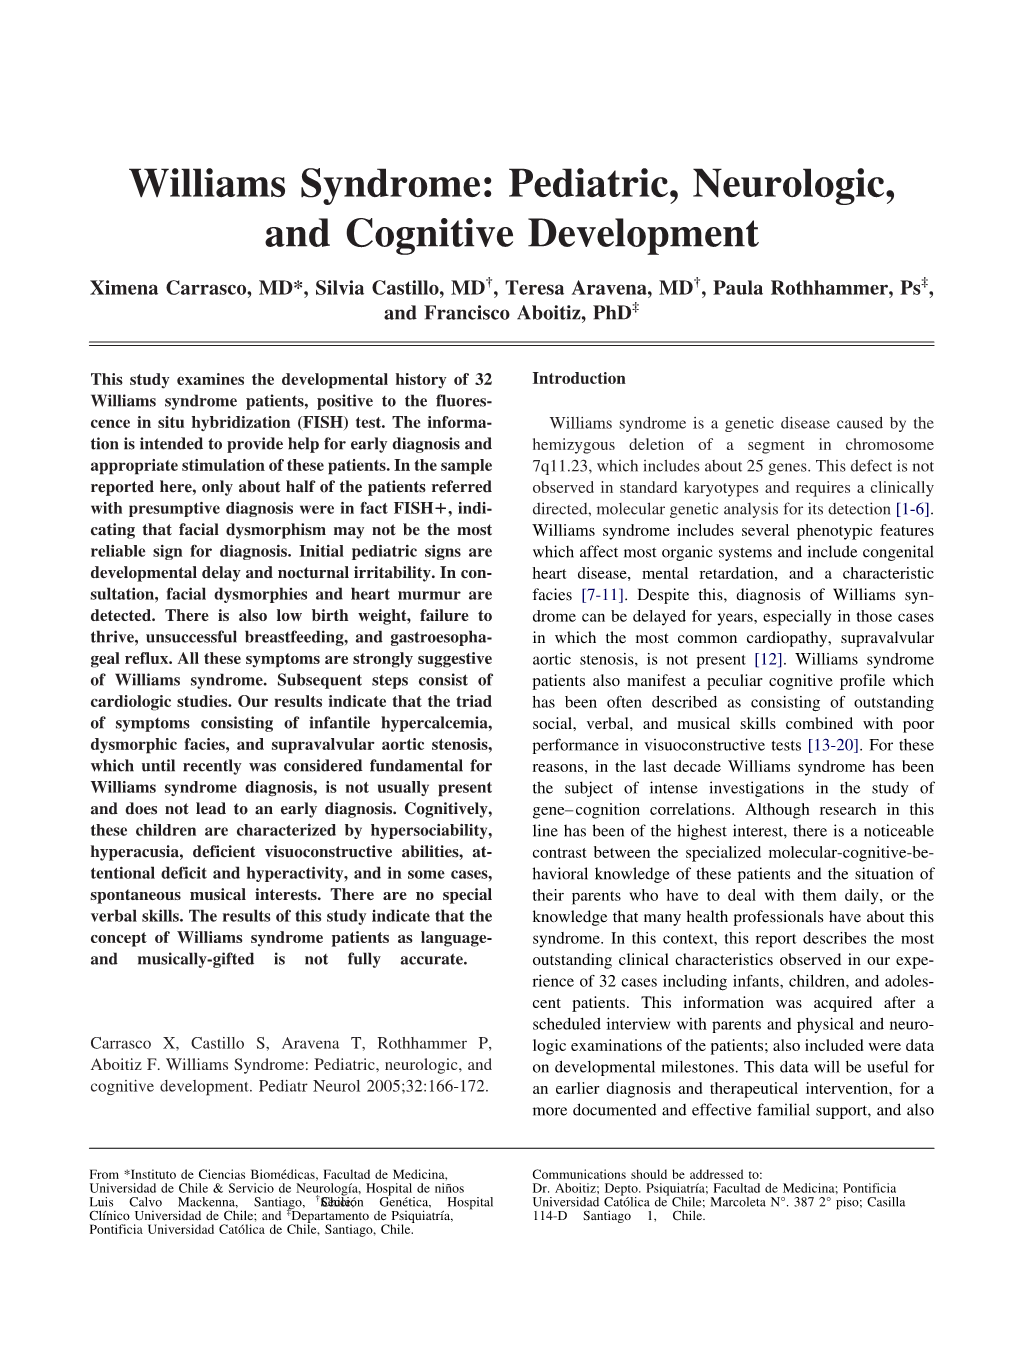 Williams Syndrome: Pediatric, Neurologic, and Cognitive Development